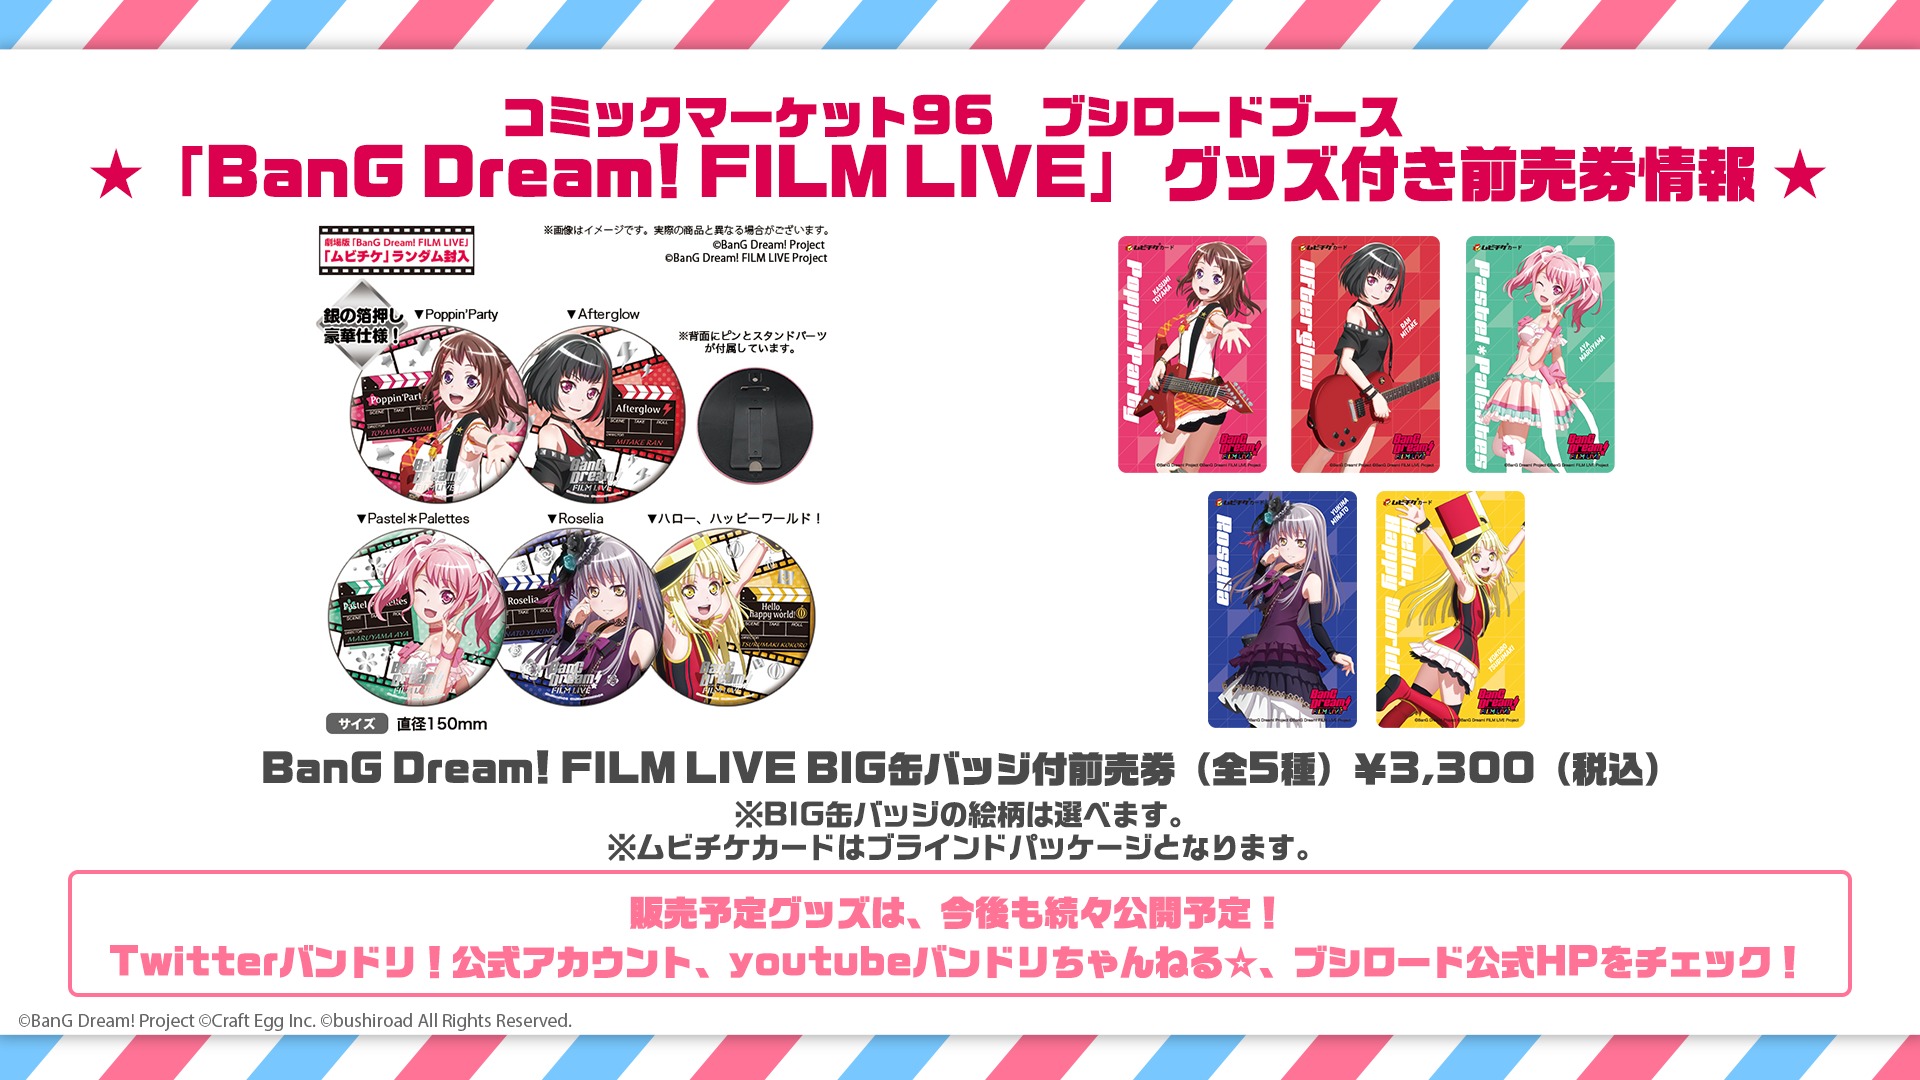 (C)BanG Dream! Project (C)Craft Egg Inc. (C)BanG Dream! FILM LIVE Project (C)bushiroad All Rights Reserved.